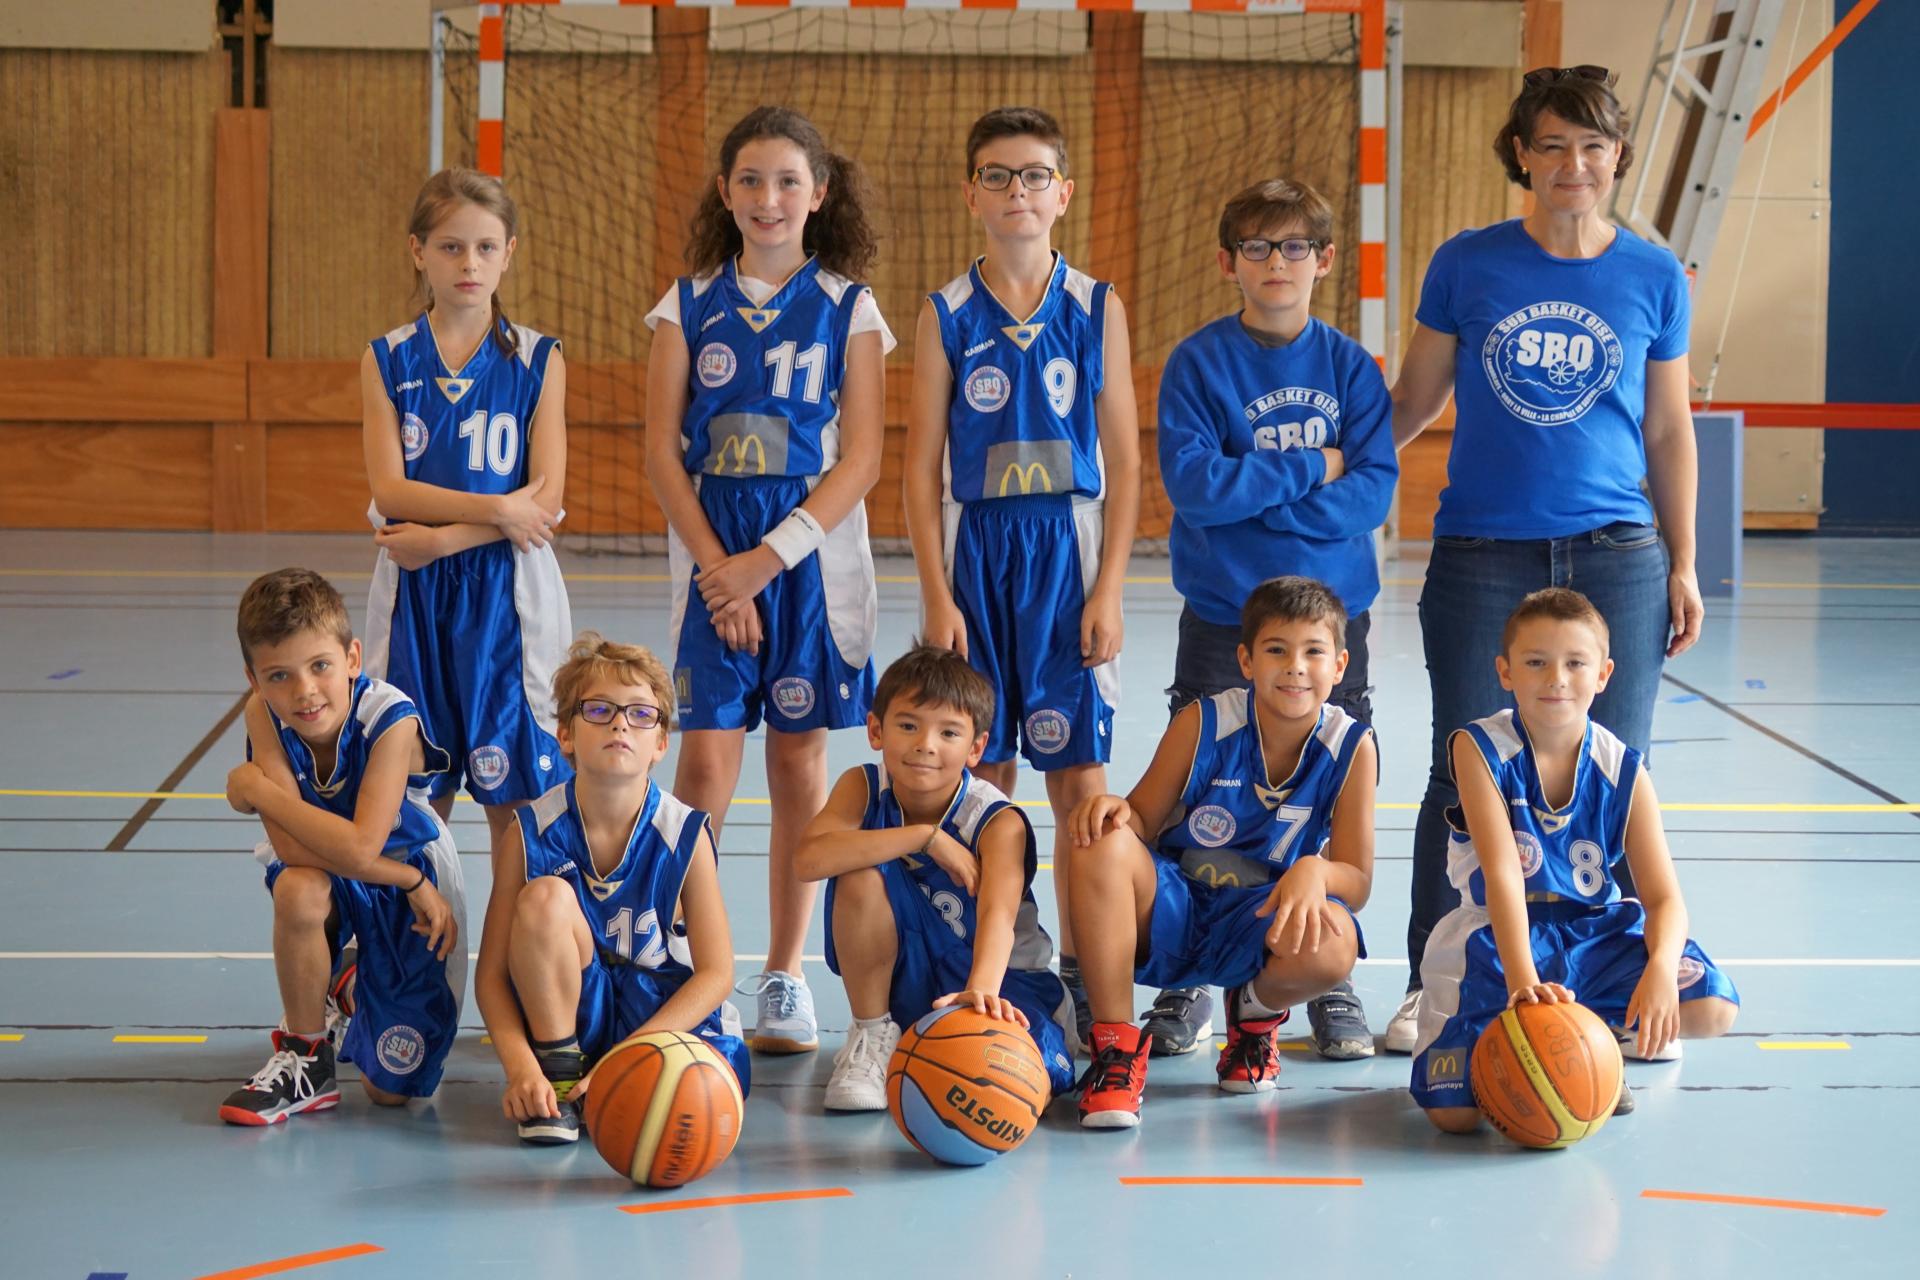 U11 Sud basket Oise Saison 2018-2019